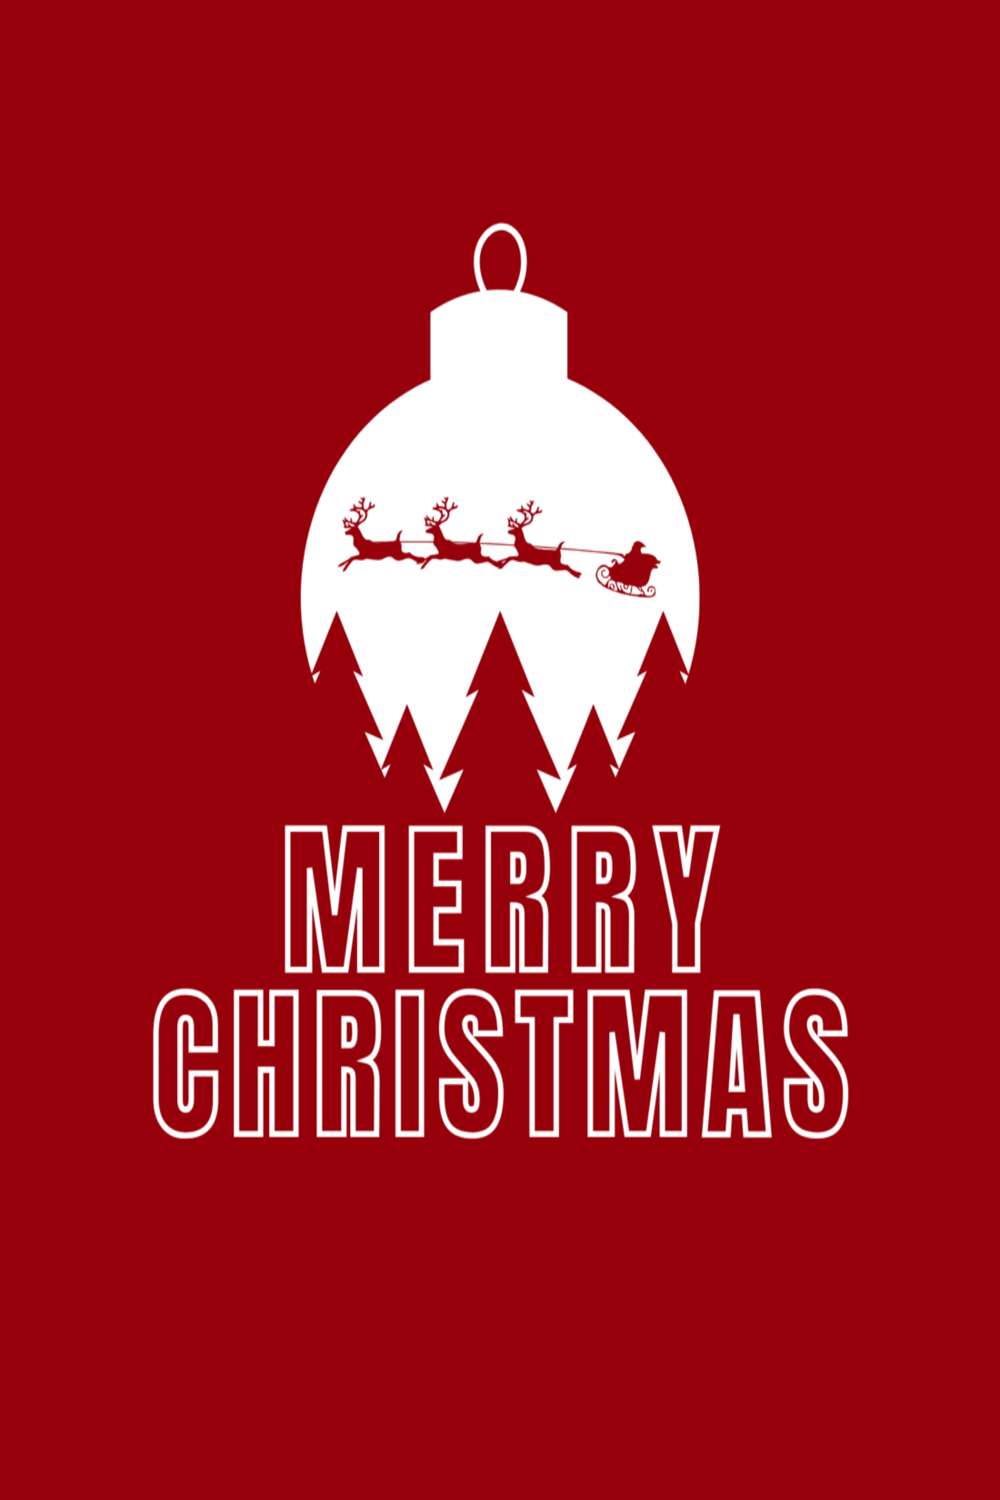 Merry Christmas t-shirt design pinterest preview image.